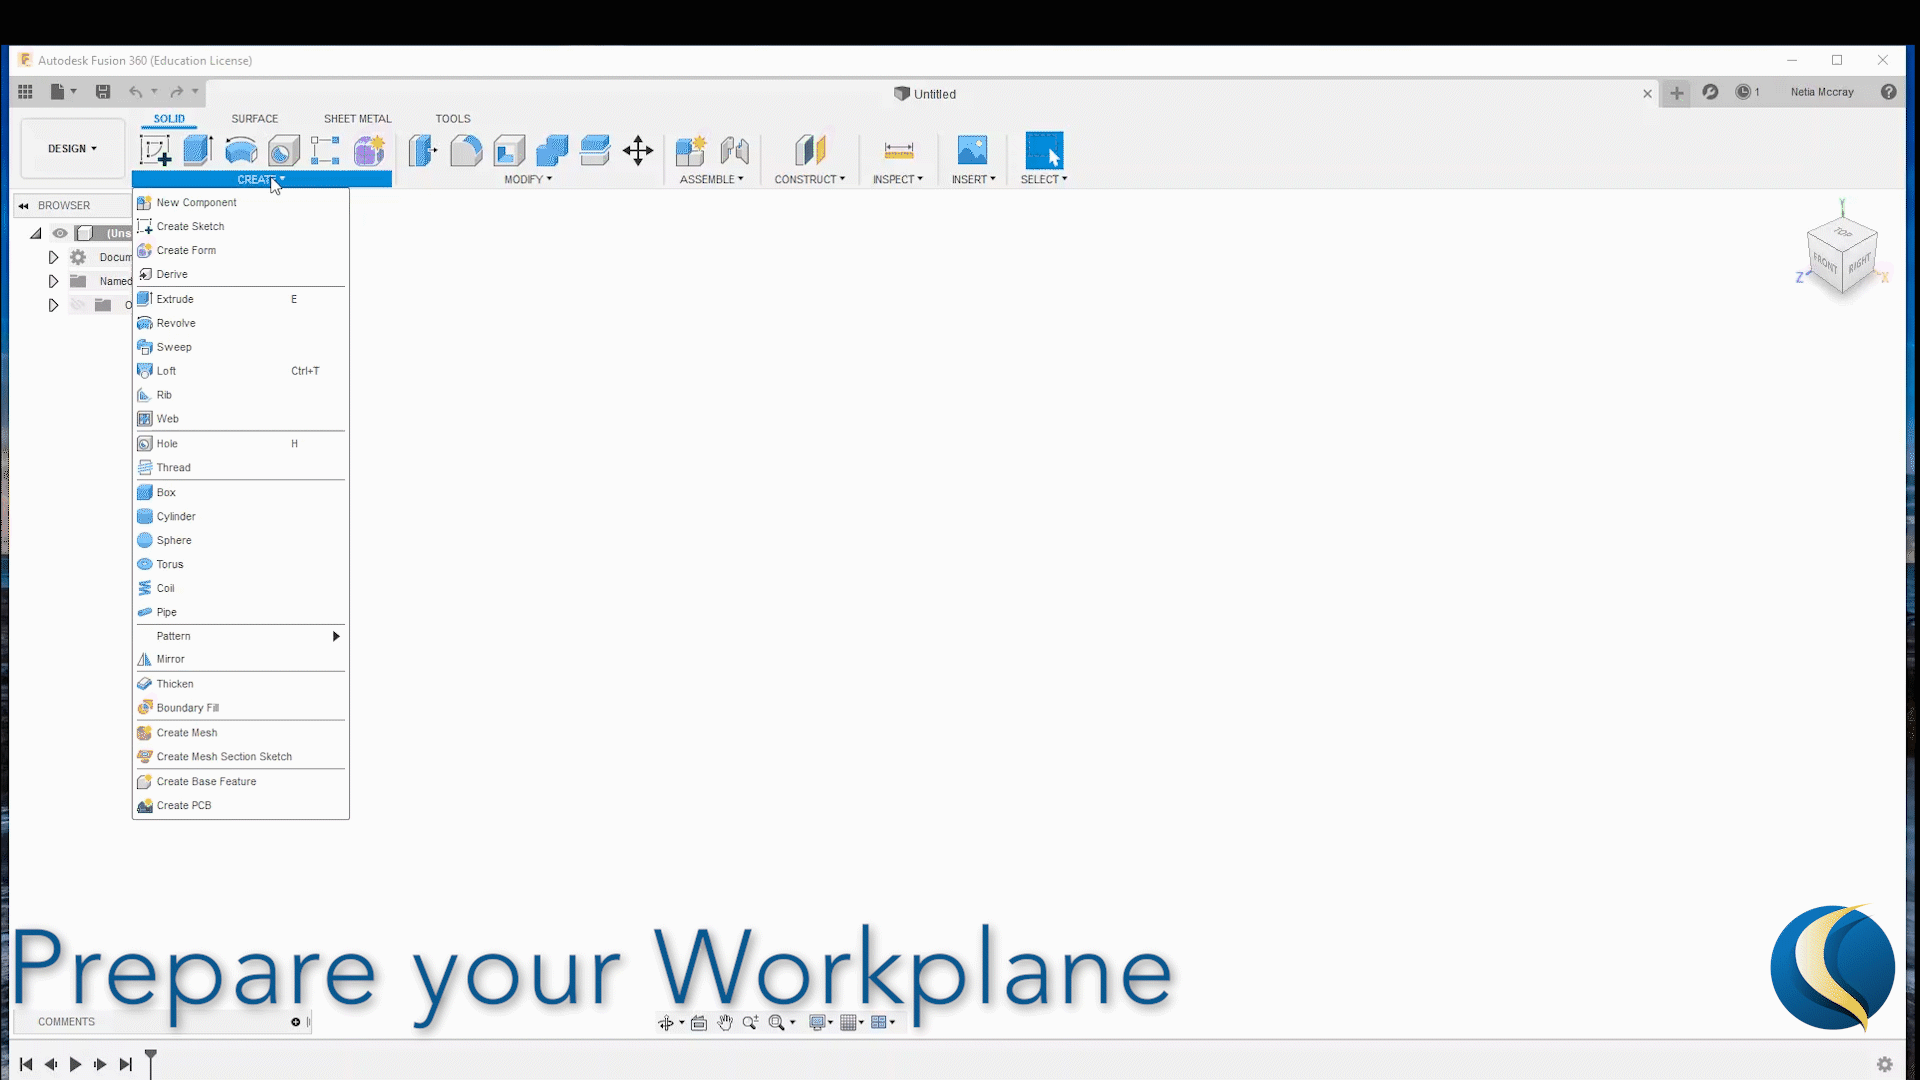 Create a Workplane